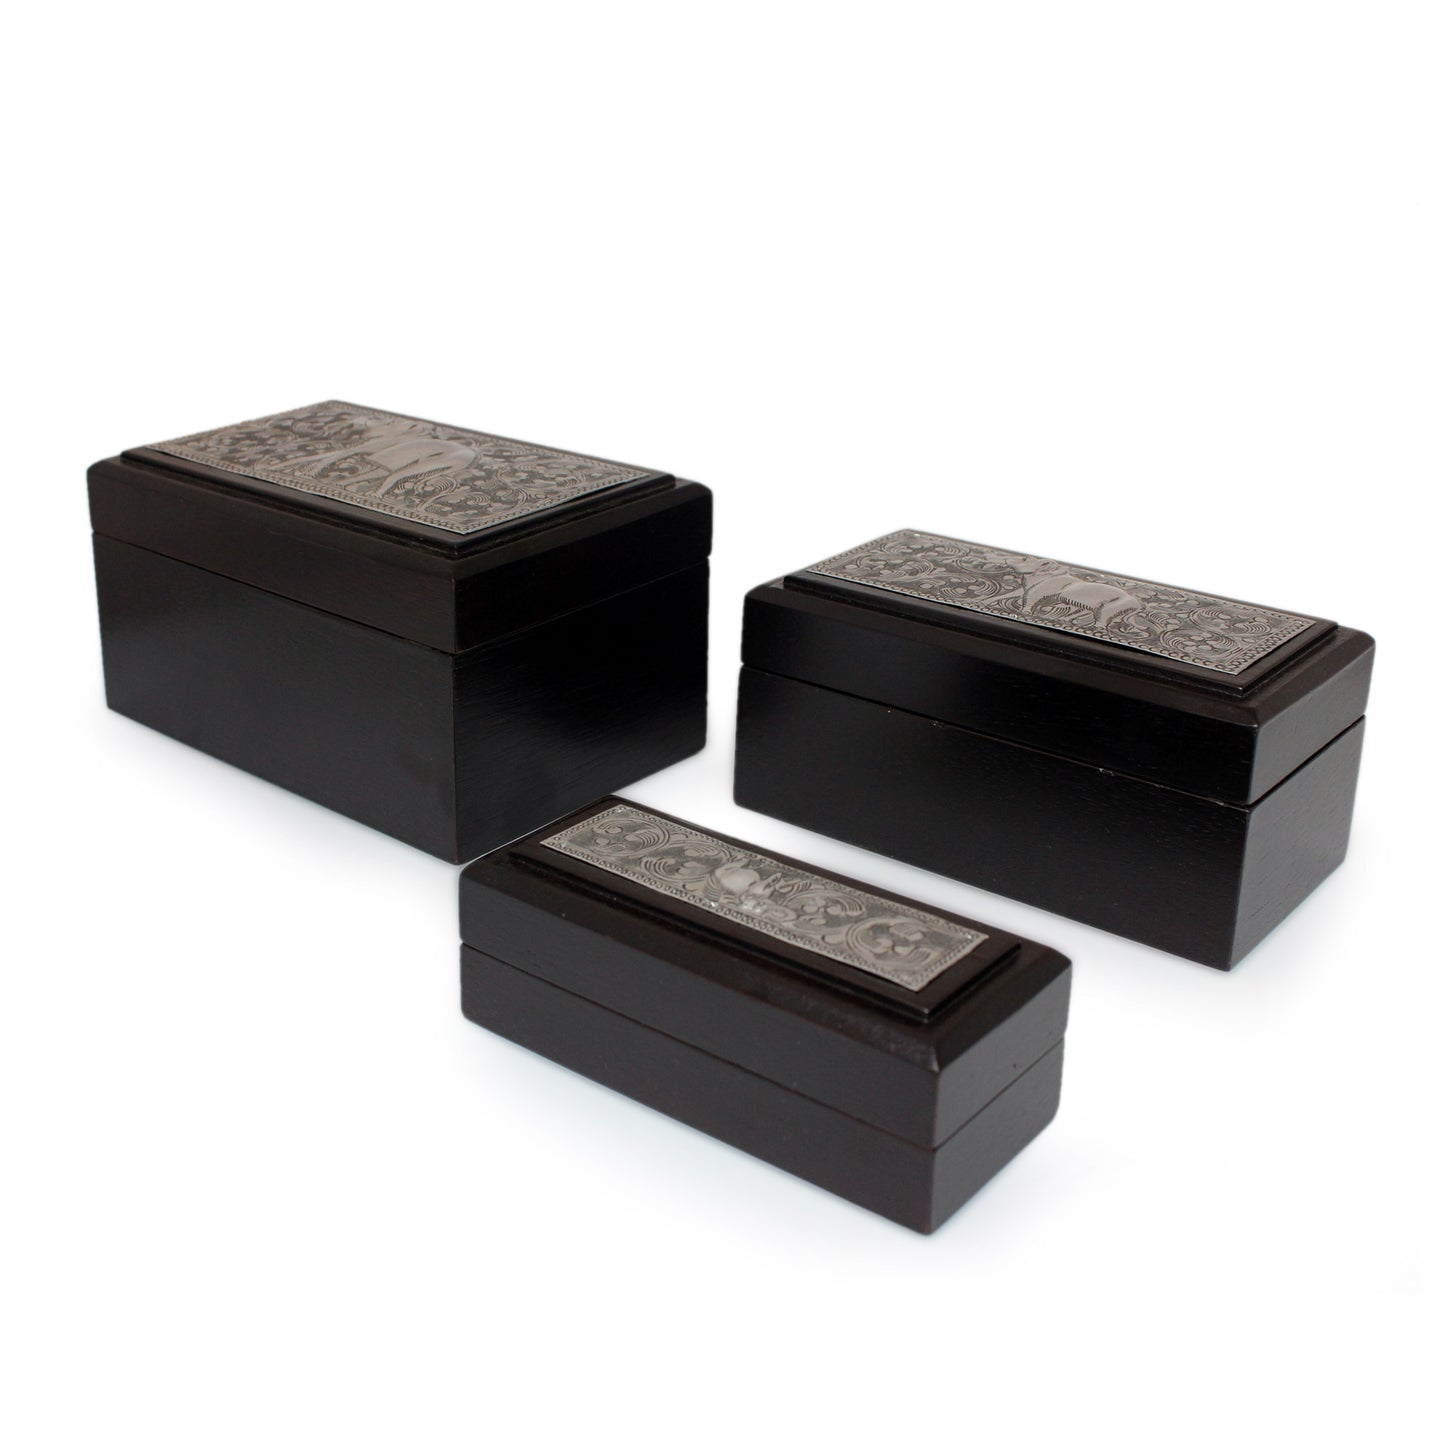 Siamese Elephant Wood & Nickel Decorative Boxes